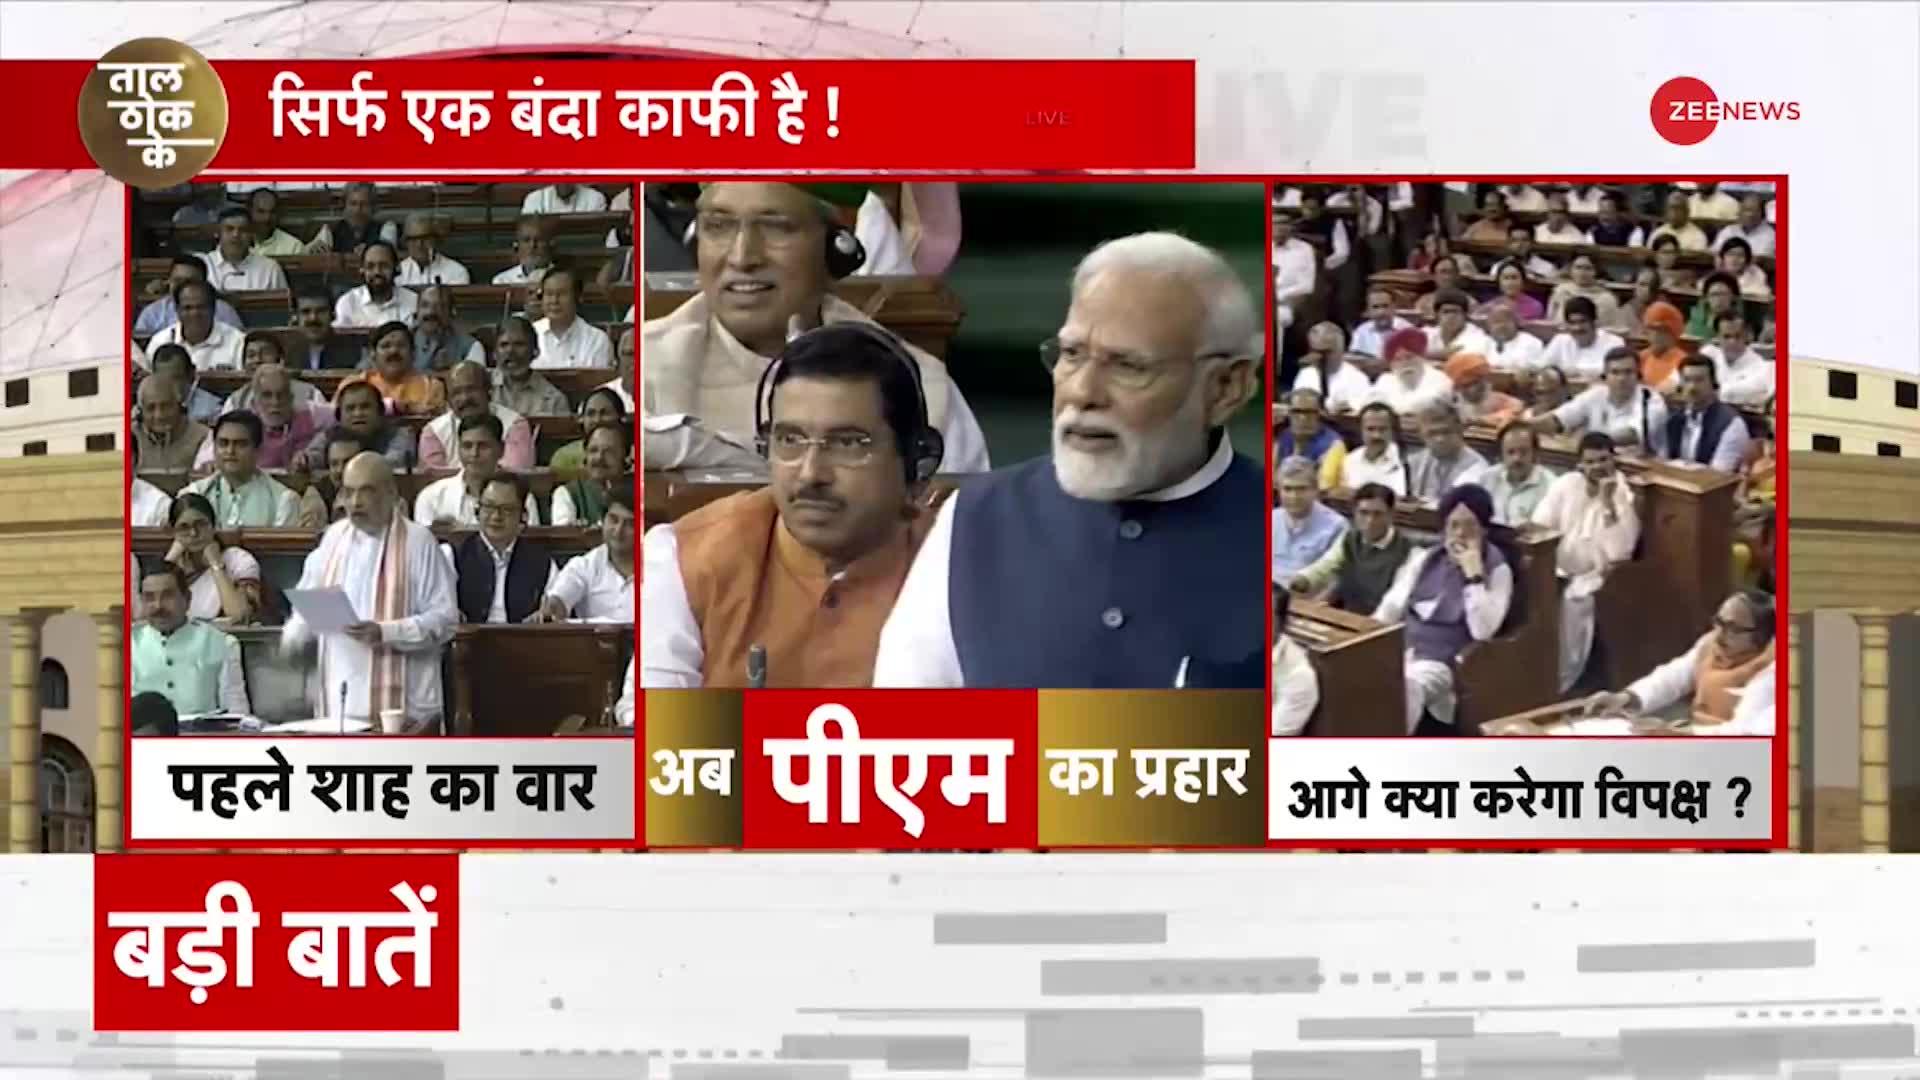 PM Modi Big Statement On Opposition Live: बेंगलुरु में विपक्ष ने UPA का अंतिम संस्कार किया